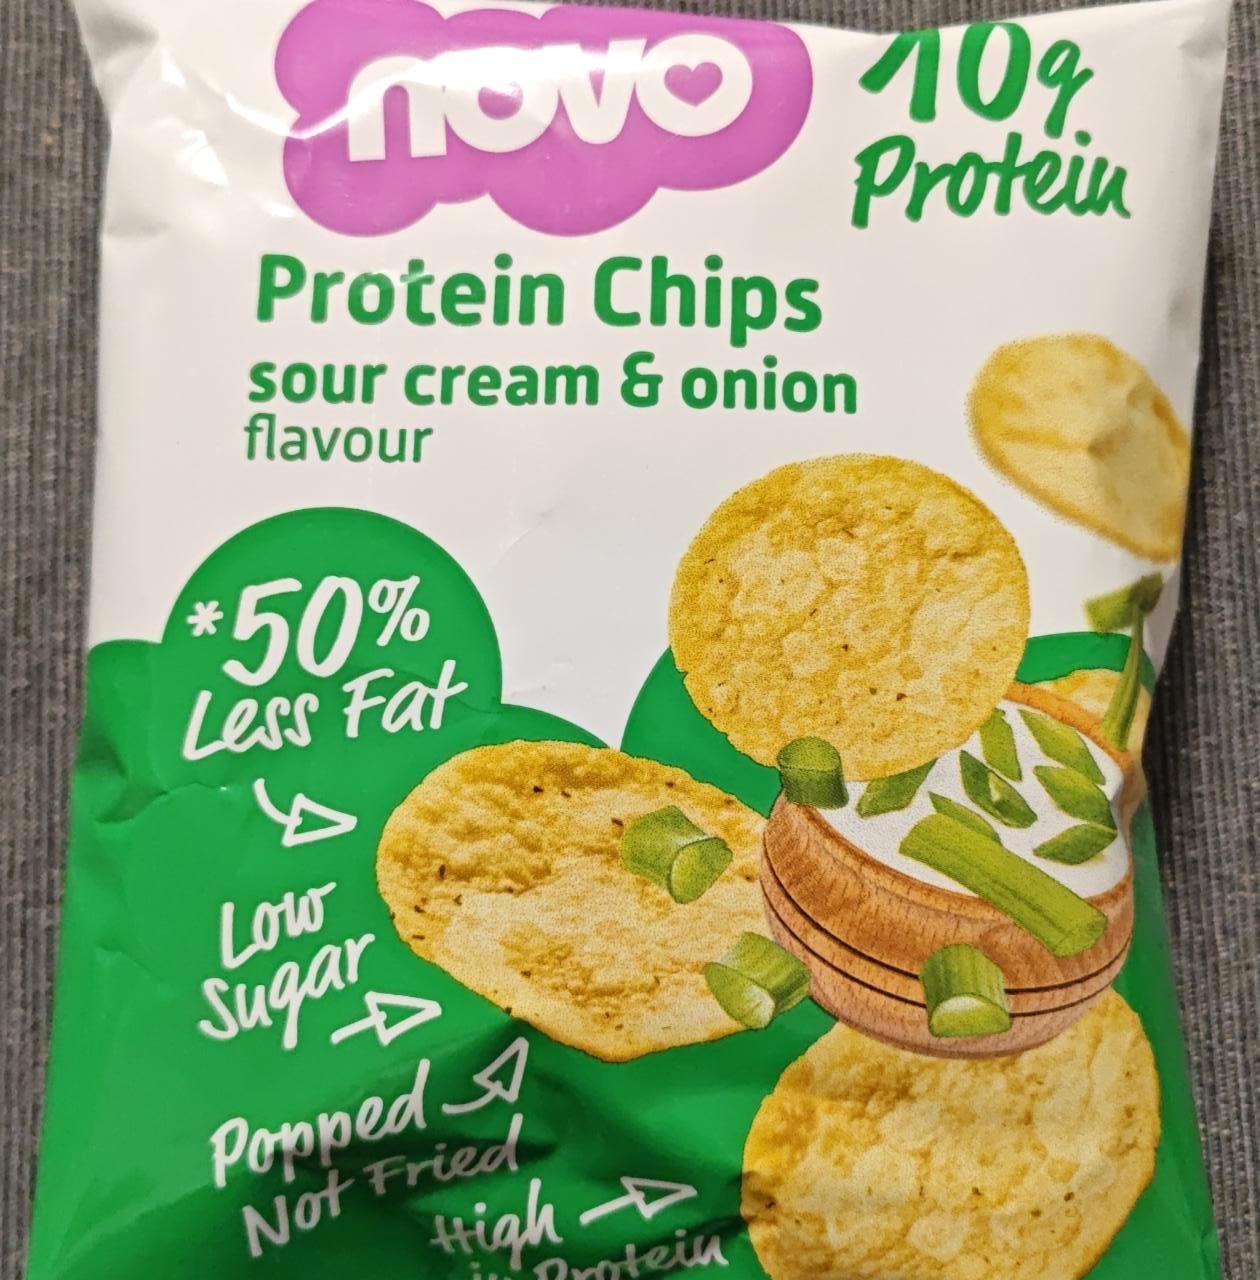 Képek - Protein chips Sour cream & onion Novo